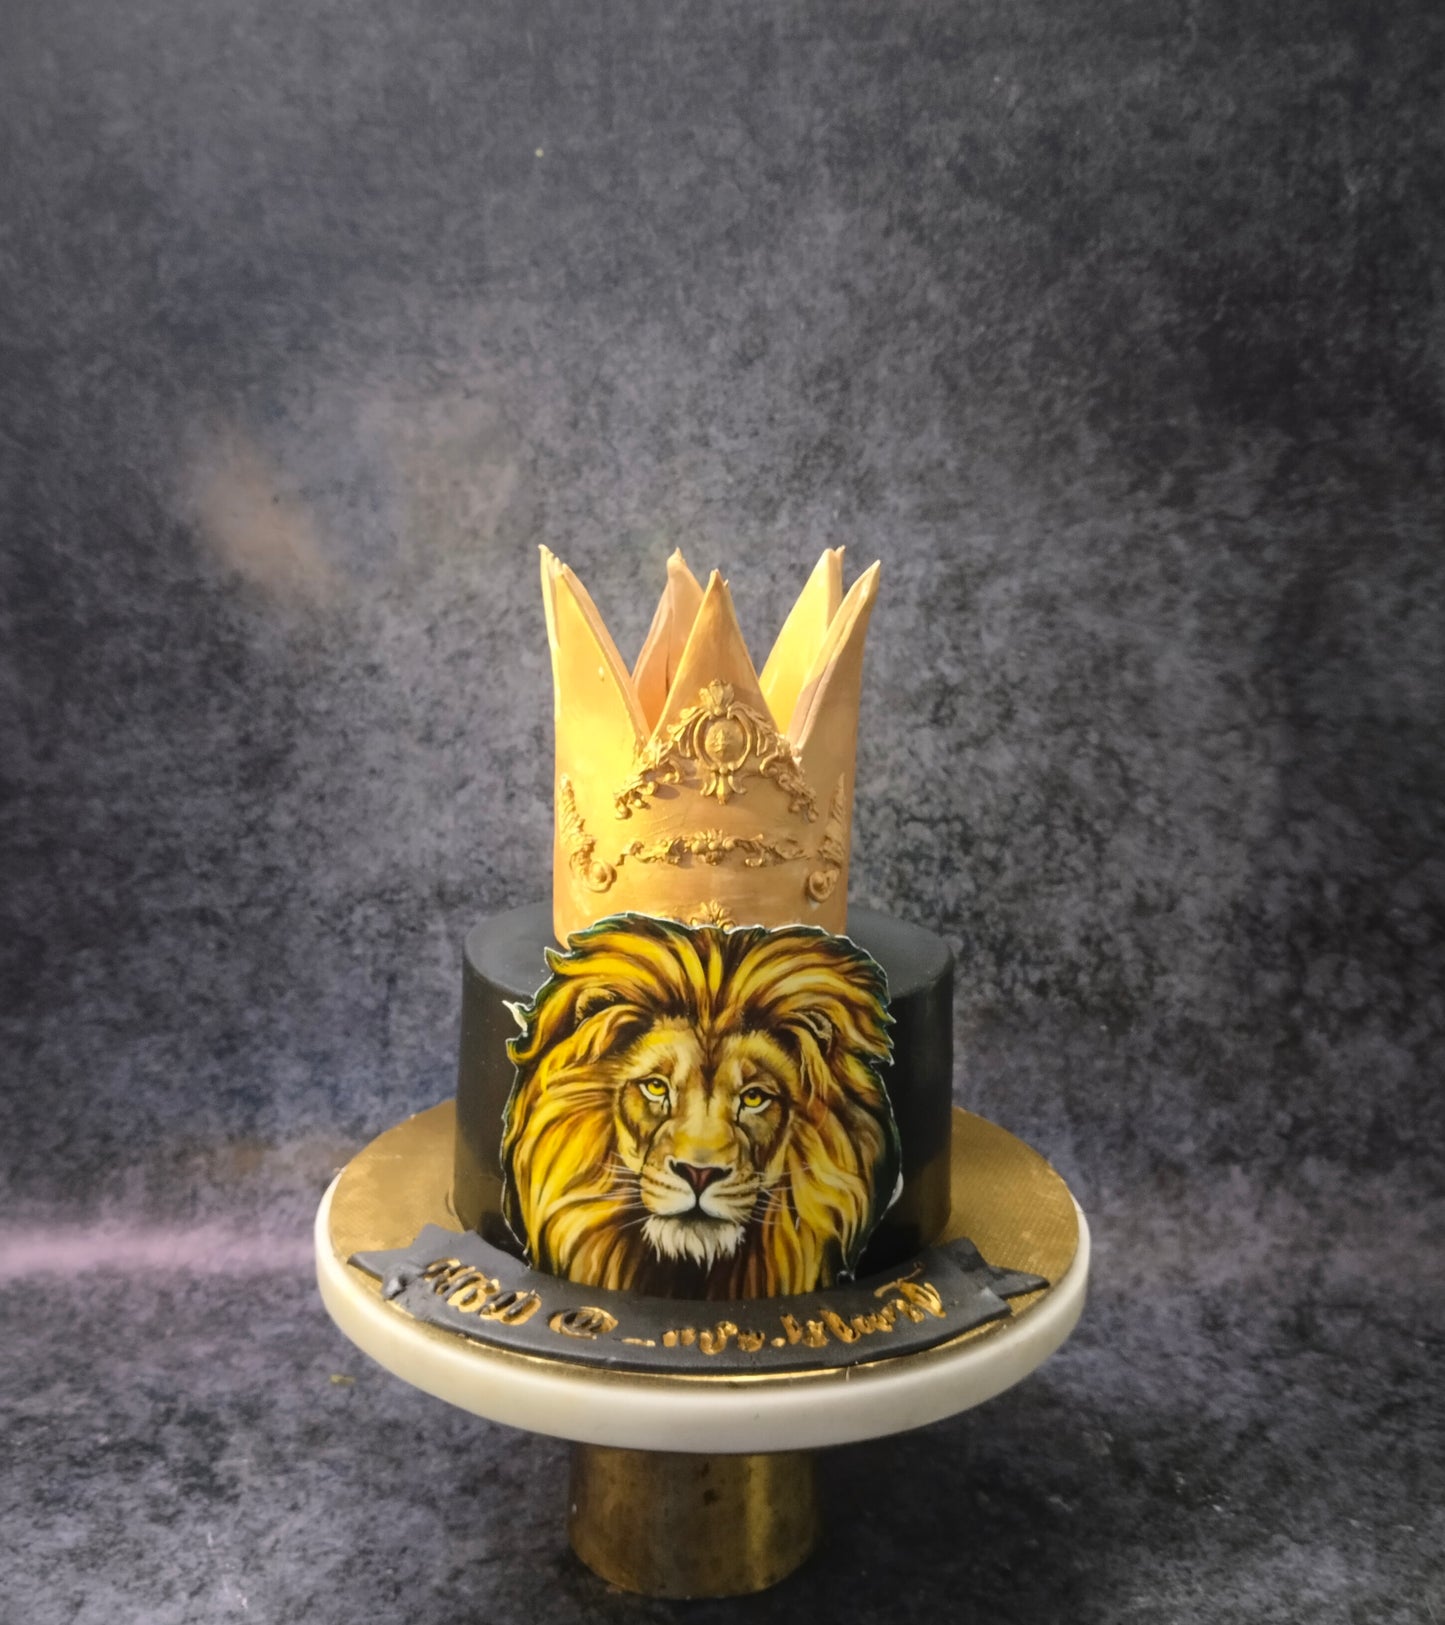 Regal Lion cake